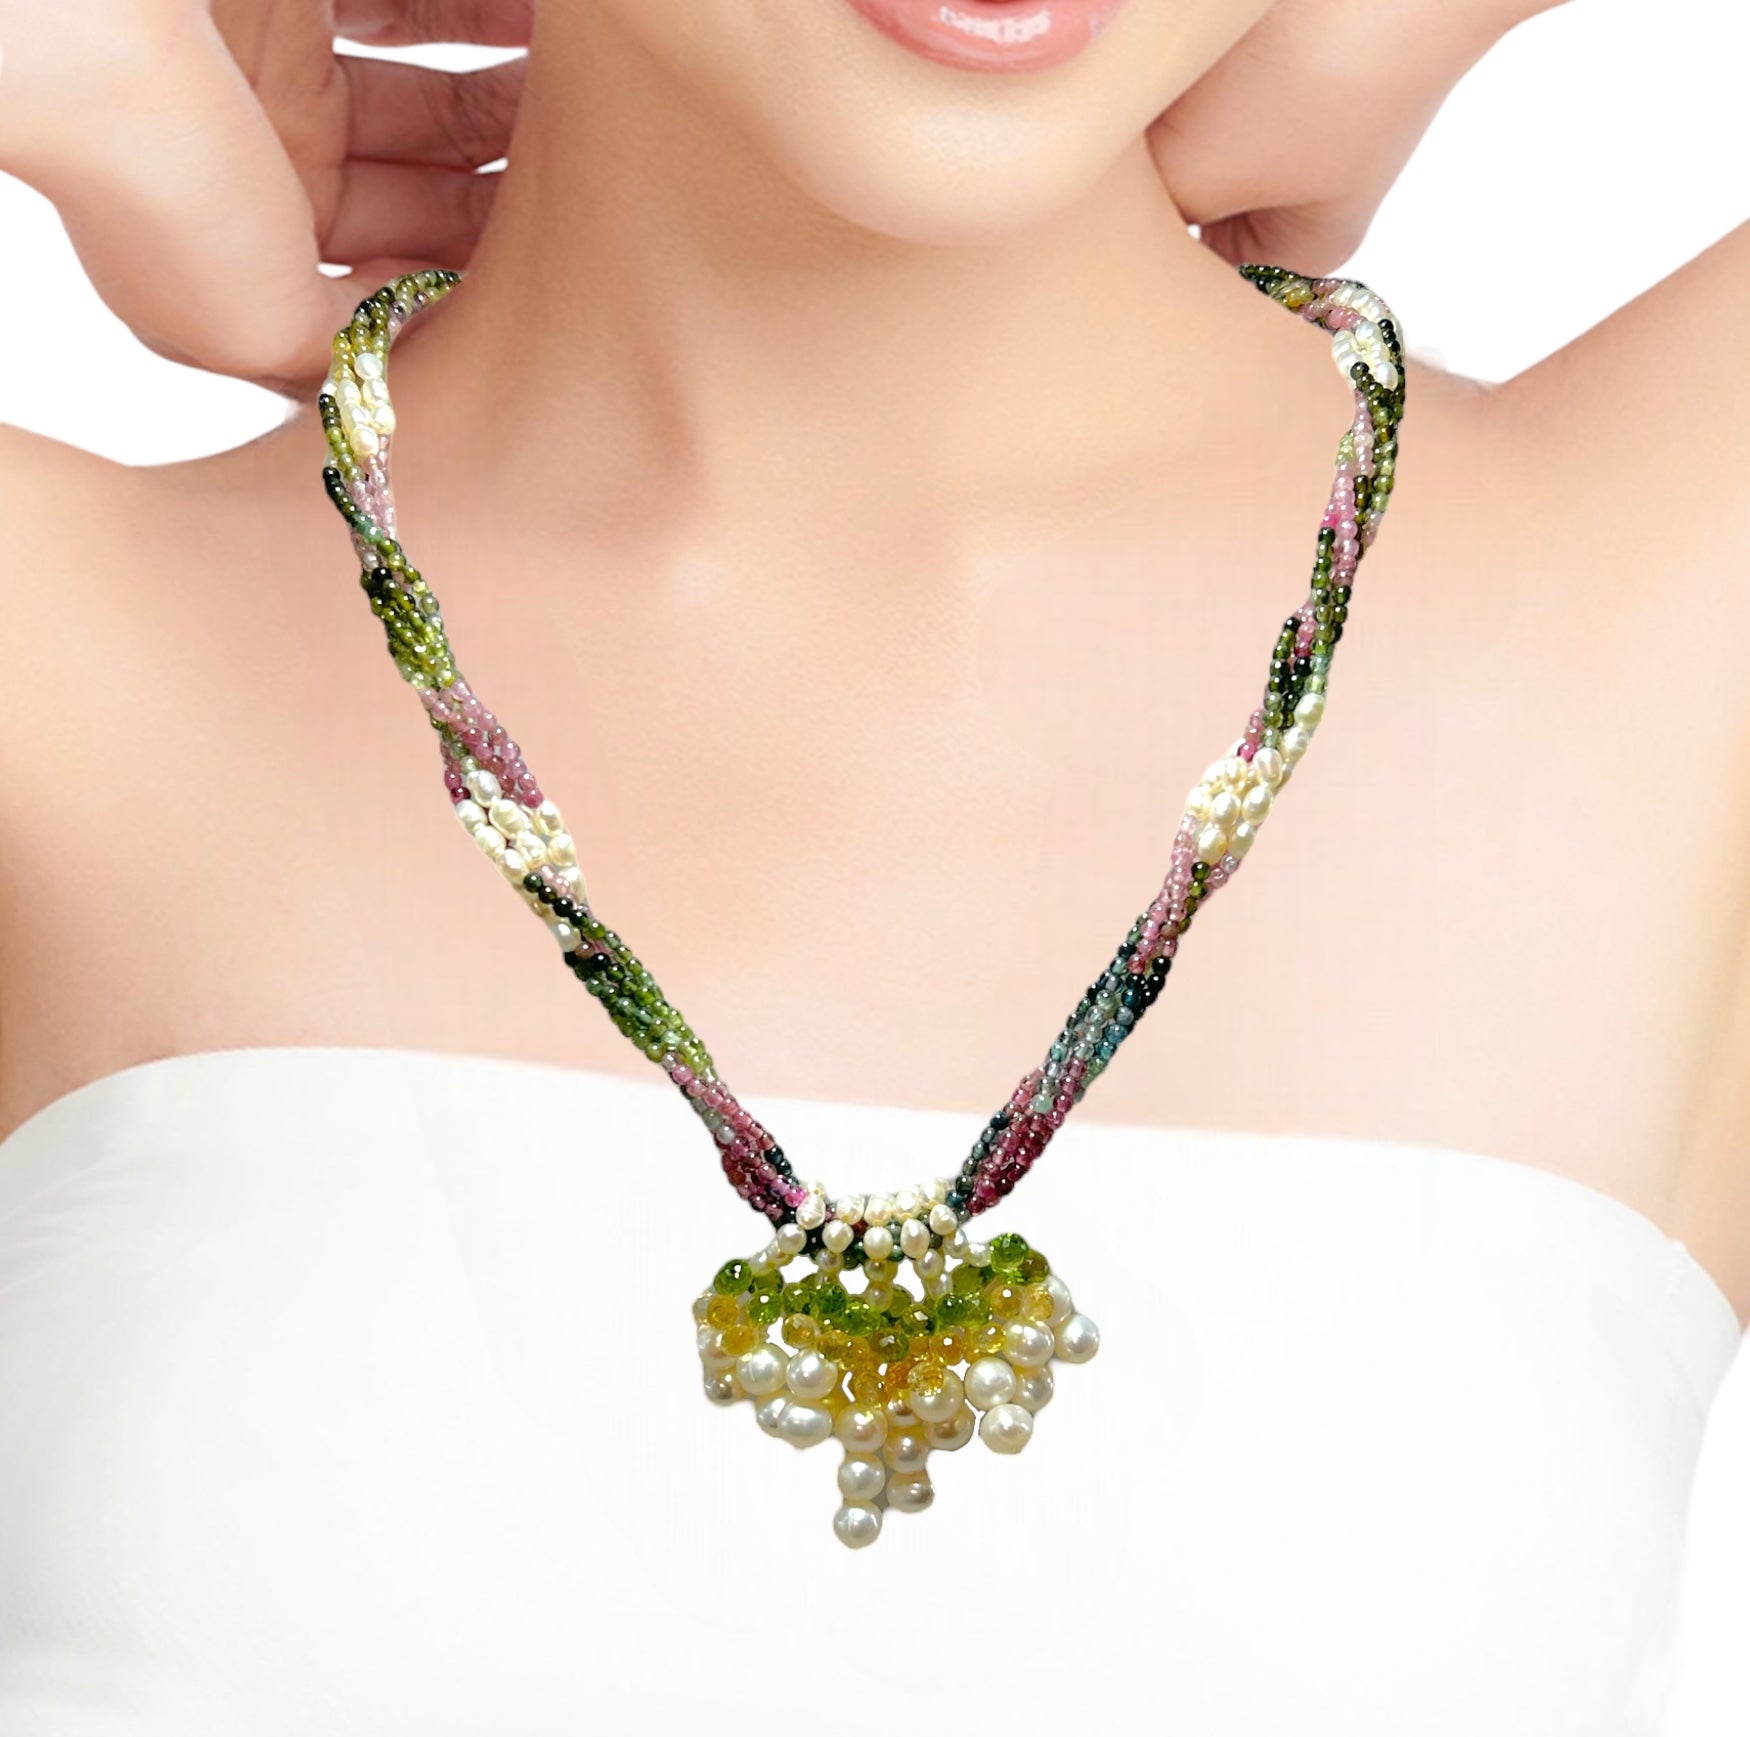 Natural Handmade Necklace 16"-18" Pearls, Peridot, Citrine, Tourmaline Gemstone Beads Jewellery